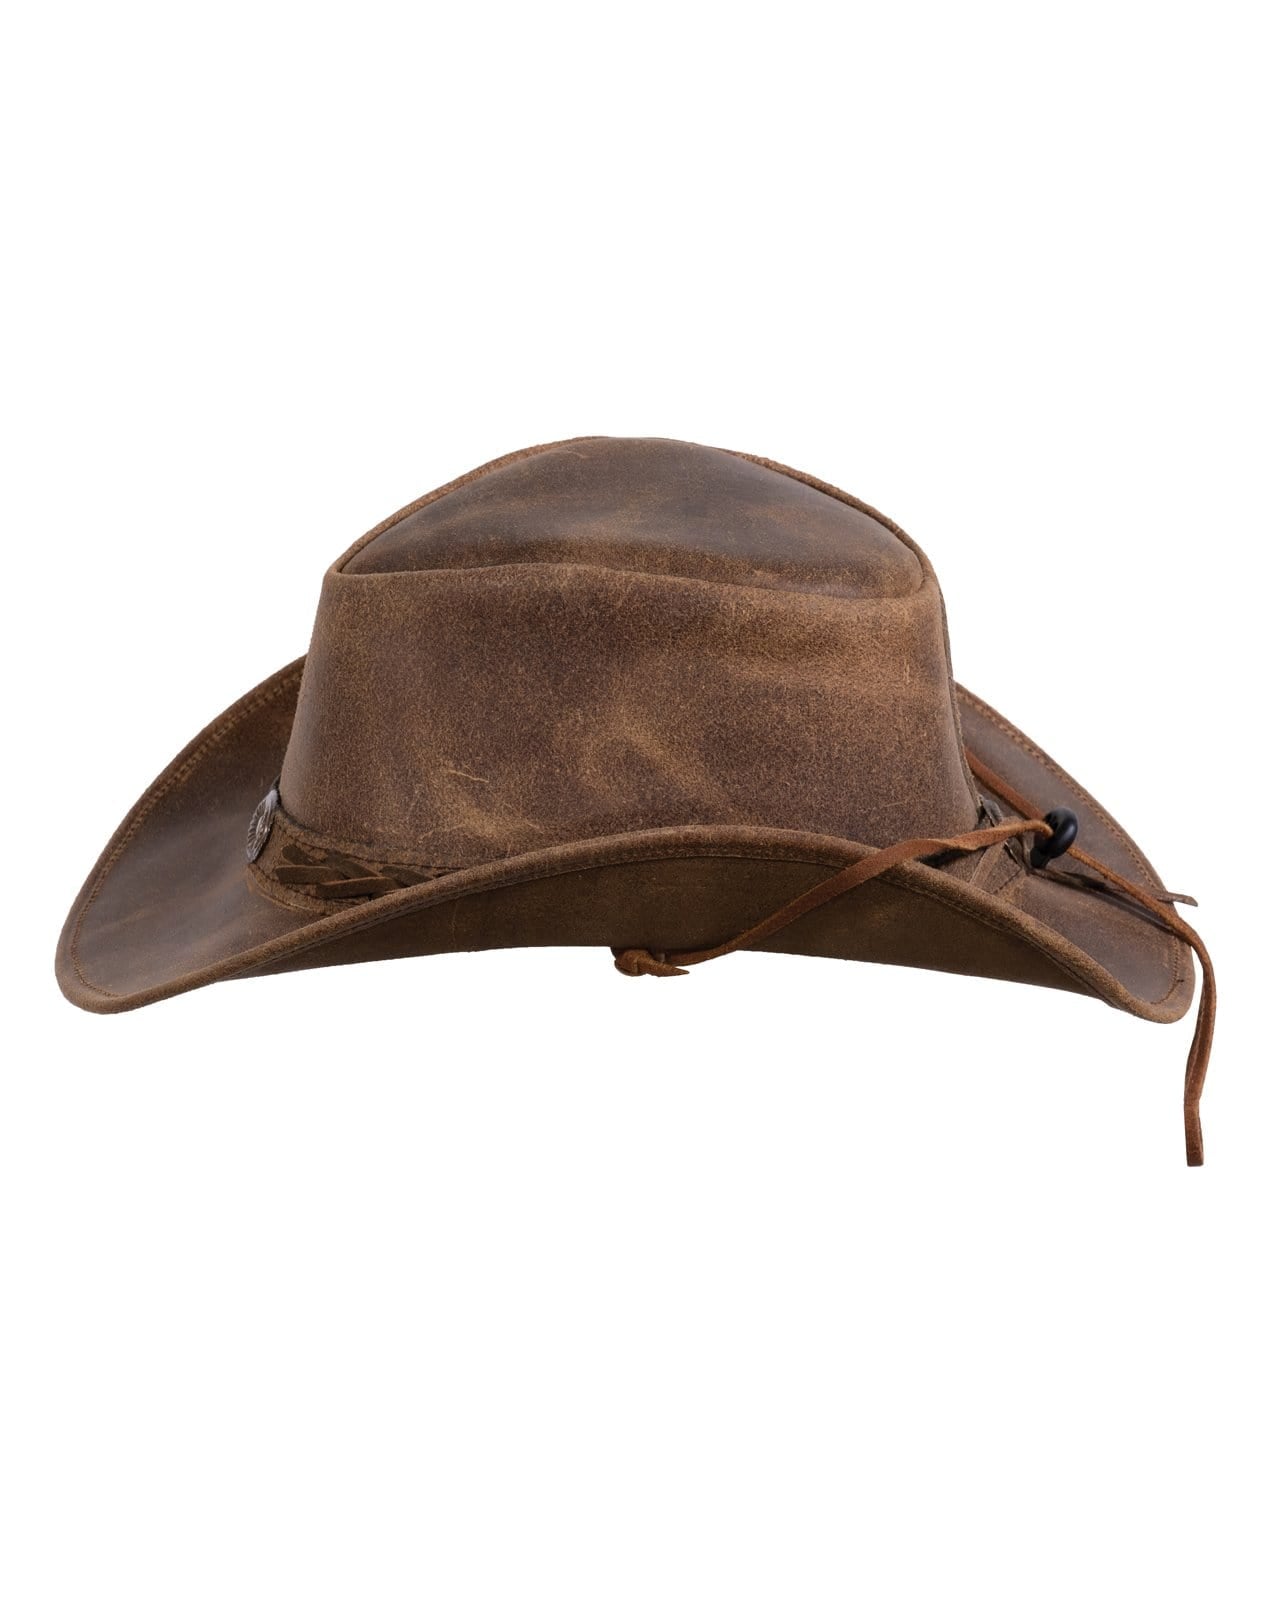 Outback Trading Company Ridge Hats